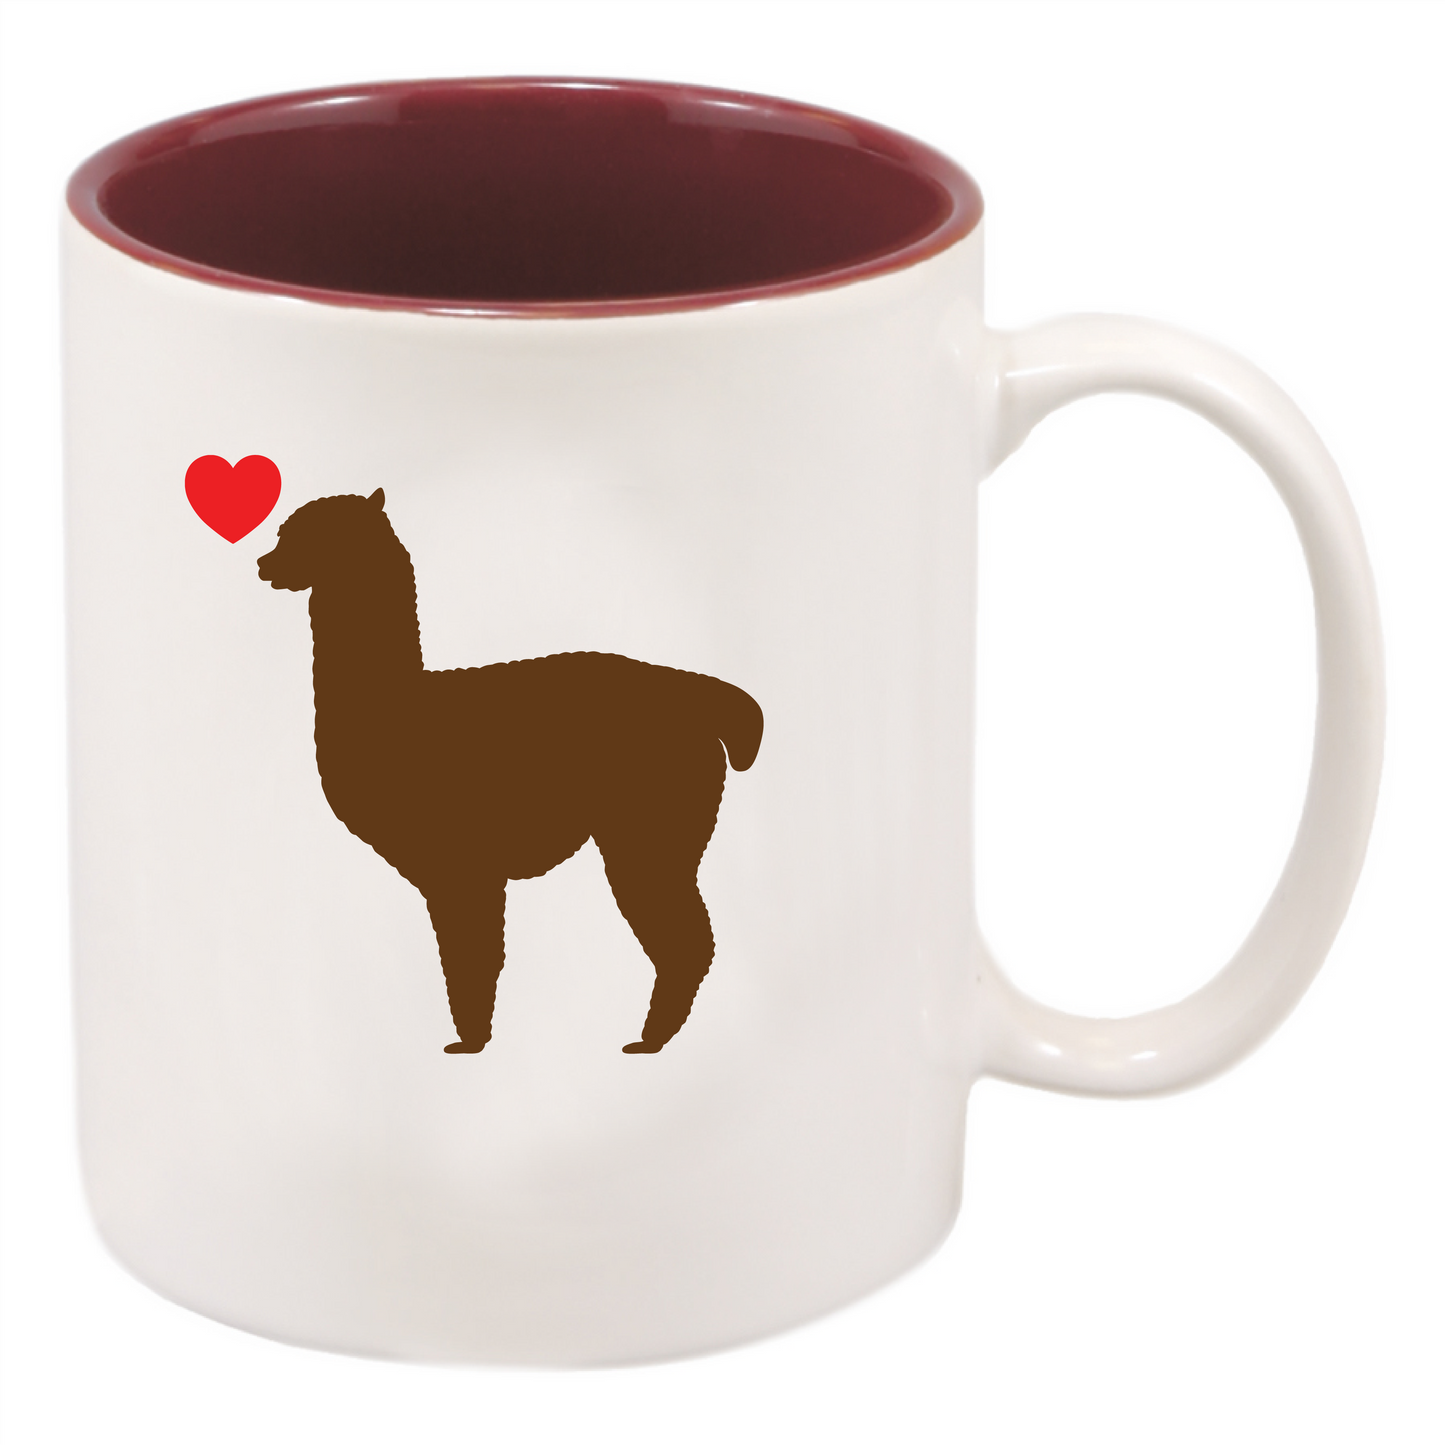 Sicilia Farms Alpaca Love - Bounty 11oz Ceramic Mug